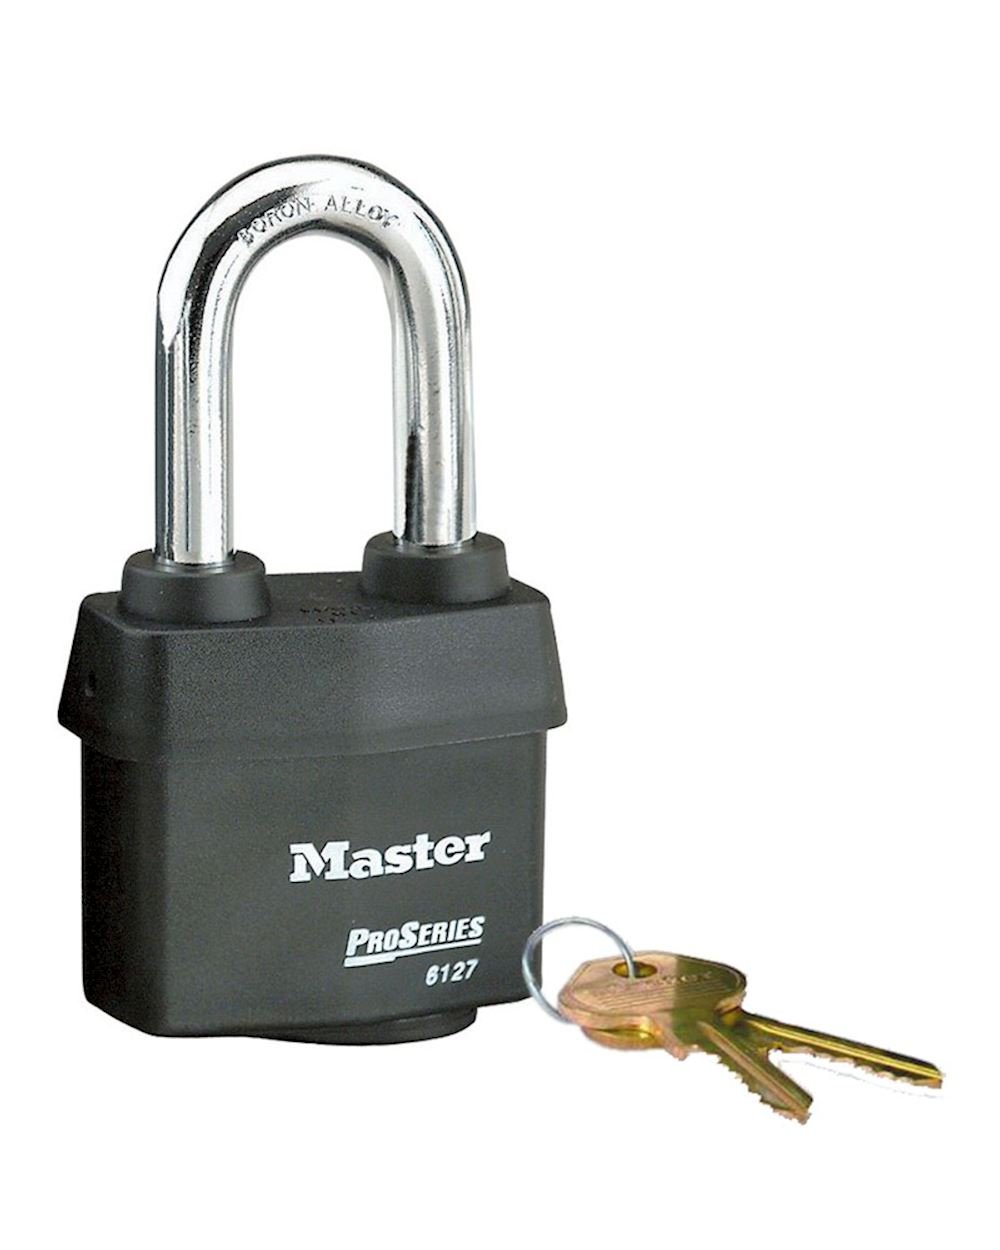 Master Pro Series 6127D Padlock | From Aspli Safety